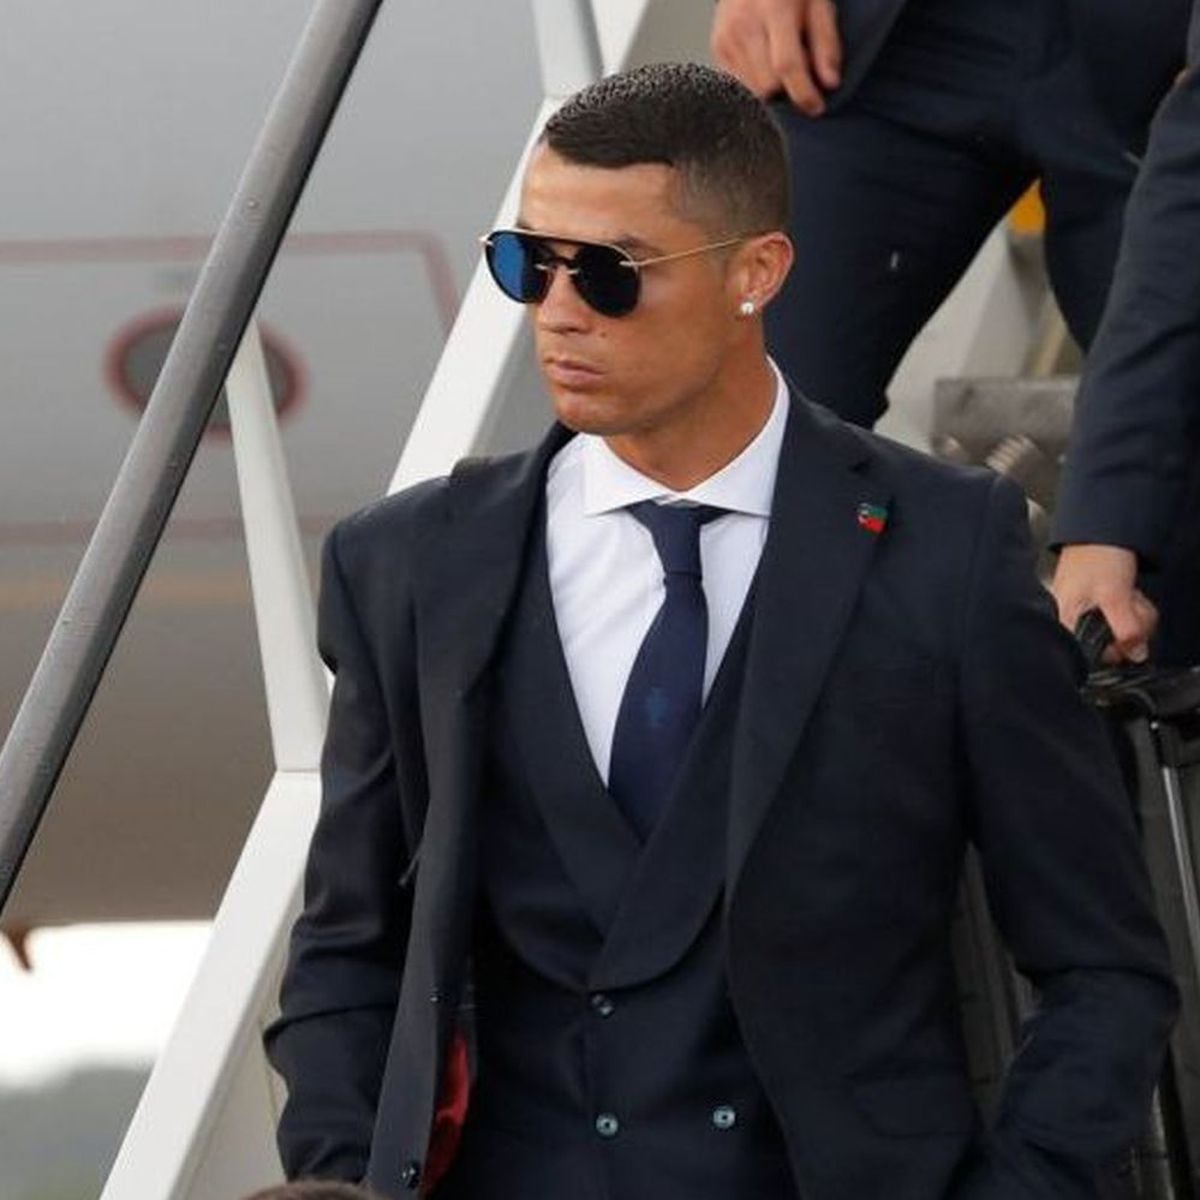 Cristiano Ronaldo's dress combination you might wanna check out.